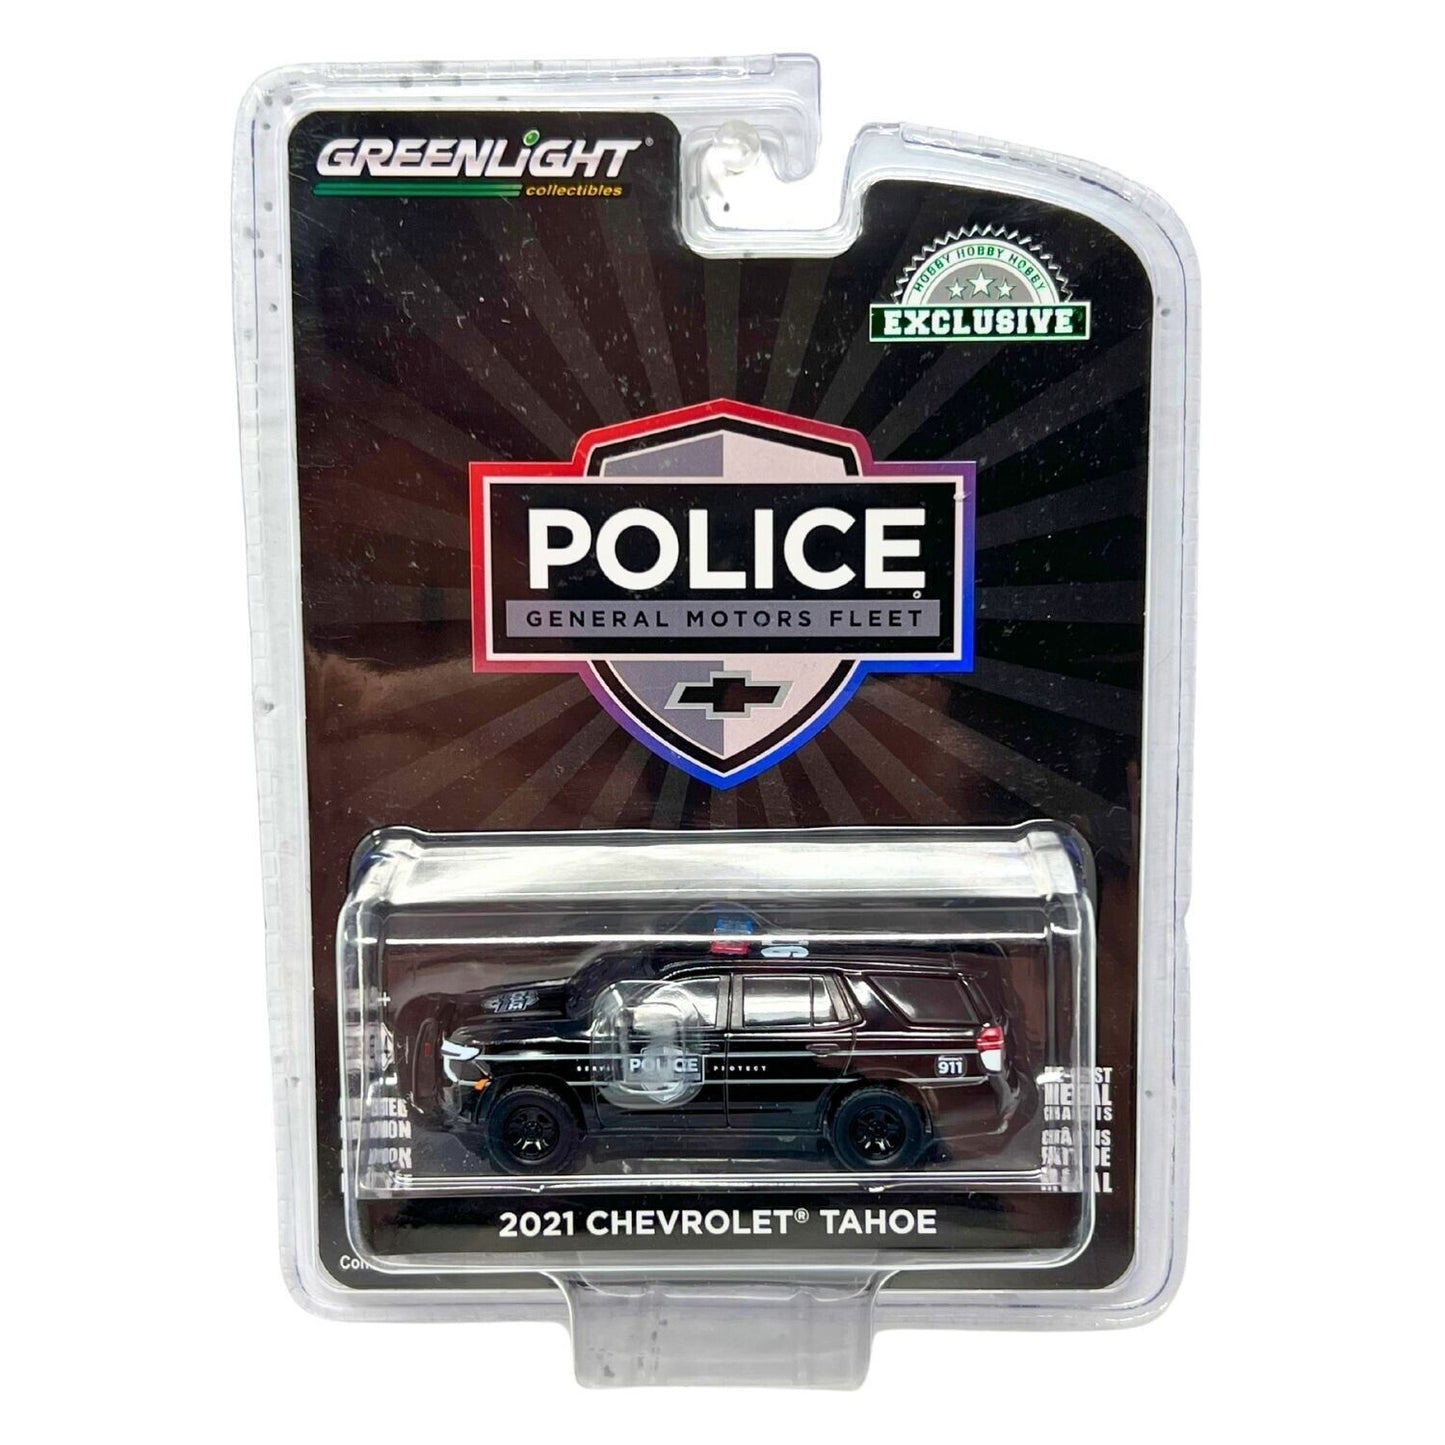 Greenlight Hobby Exclusive Police 2021 Chevrolet Tahoe 1:64 Diecast